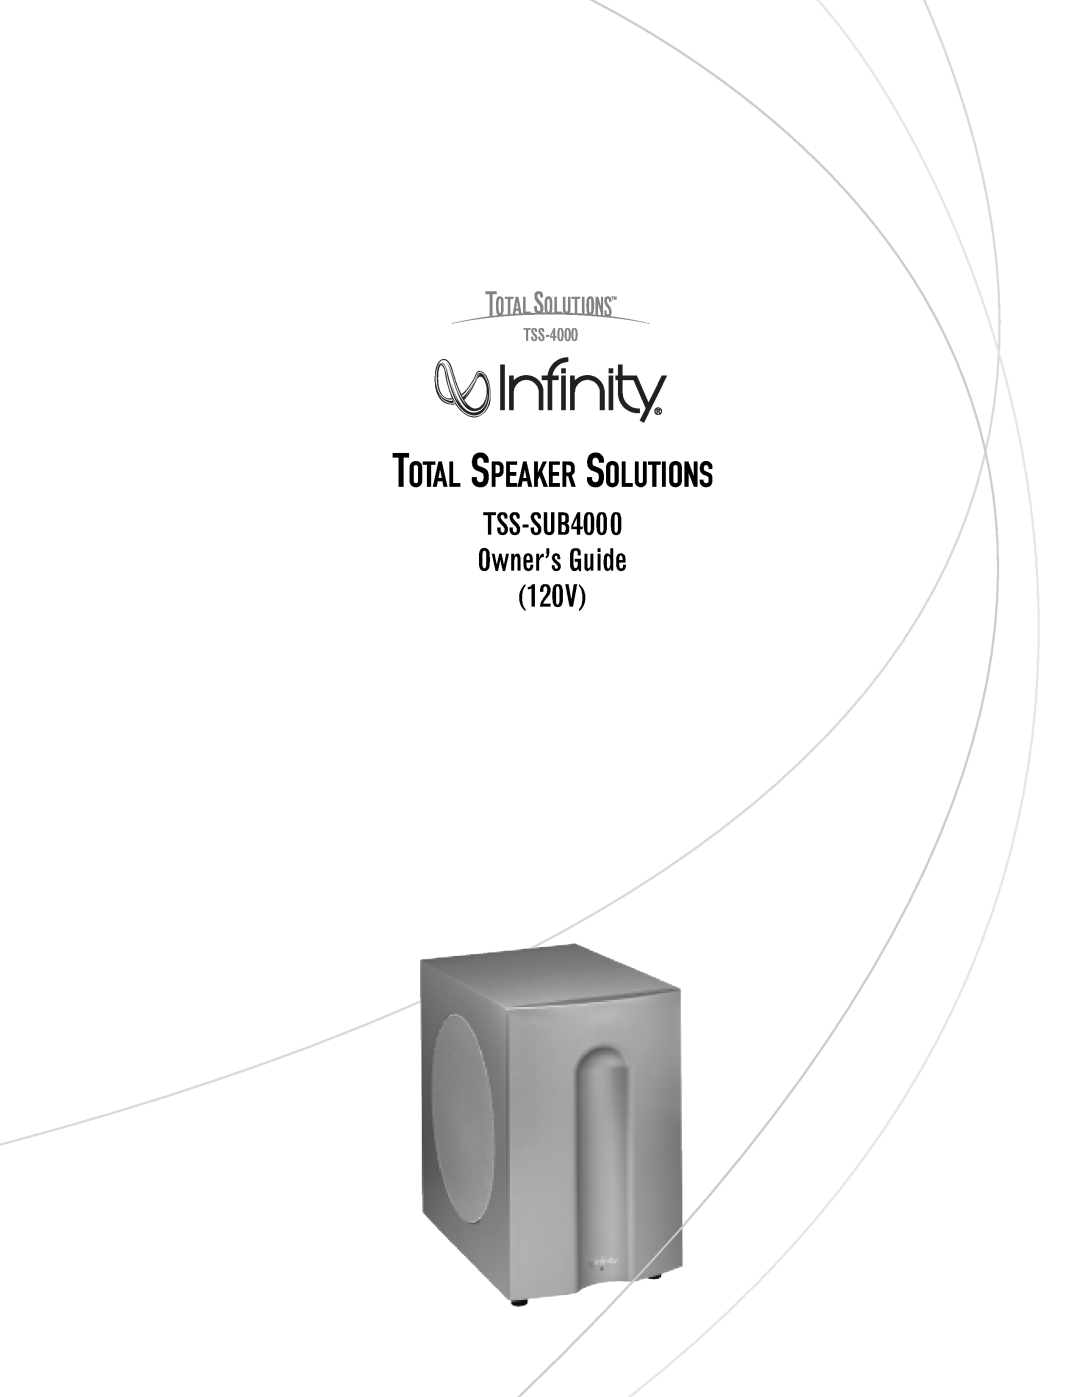 Infinity manual Total Speaker Solutions, TSS-SUB4000Owner’s Guide, TSS-4000 